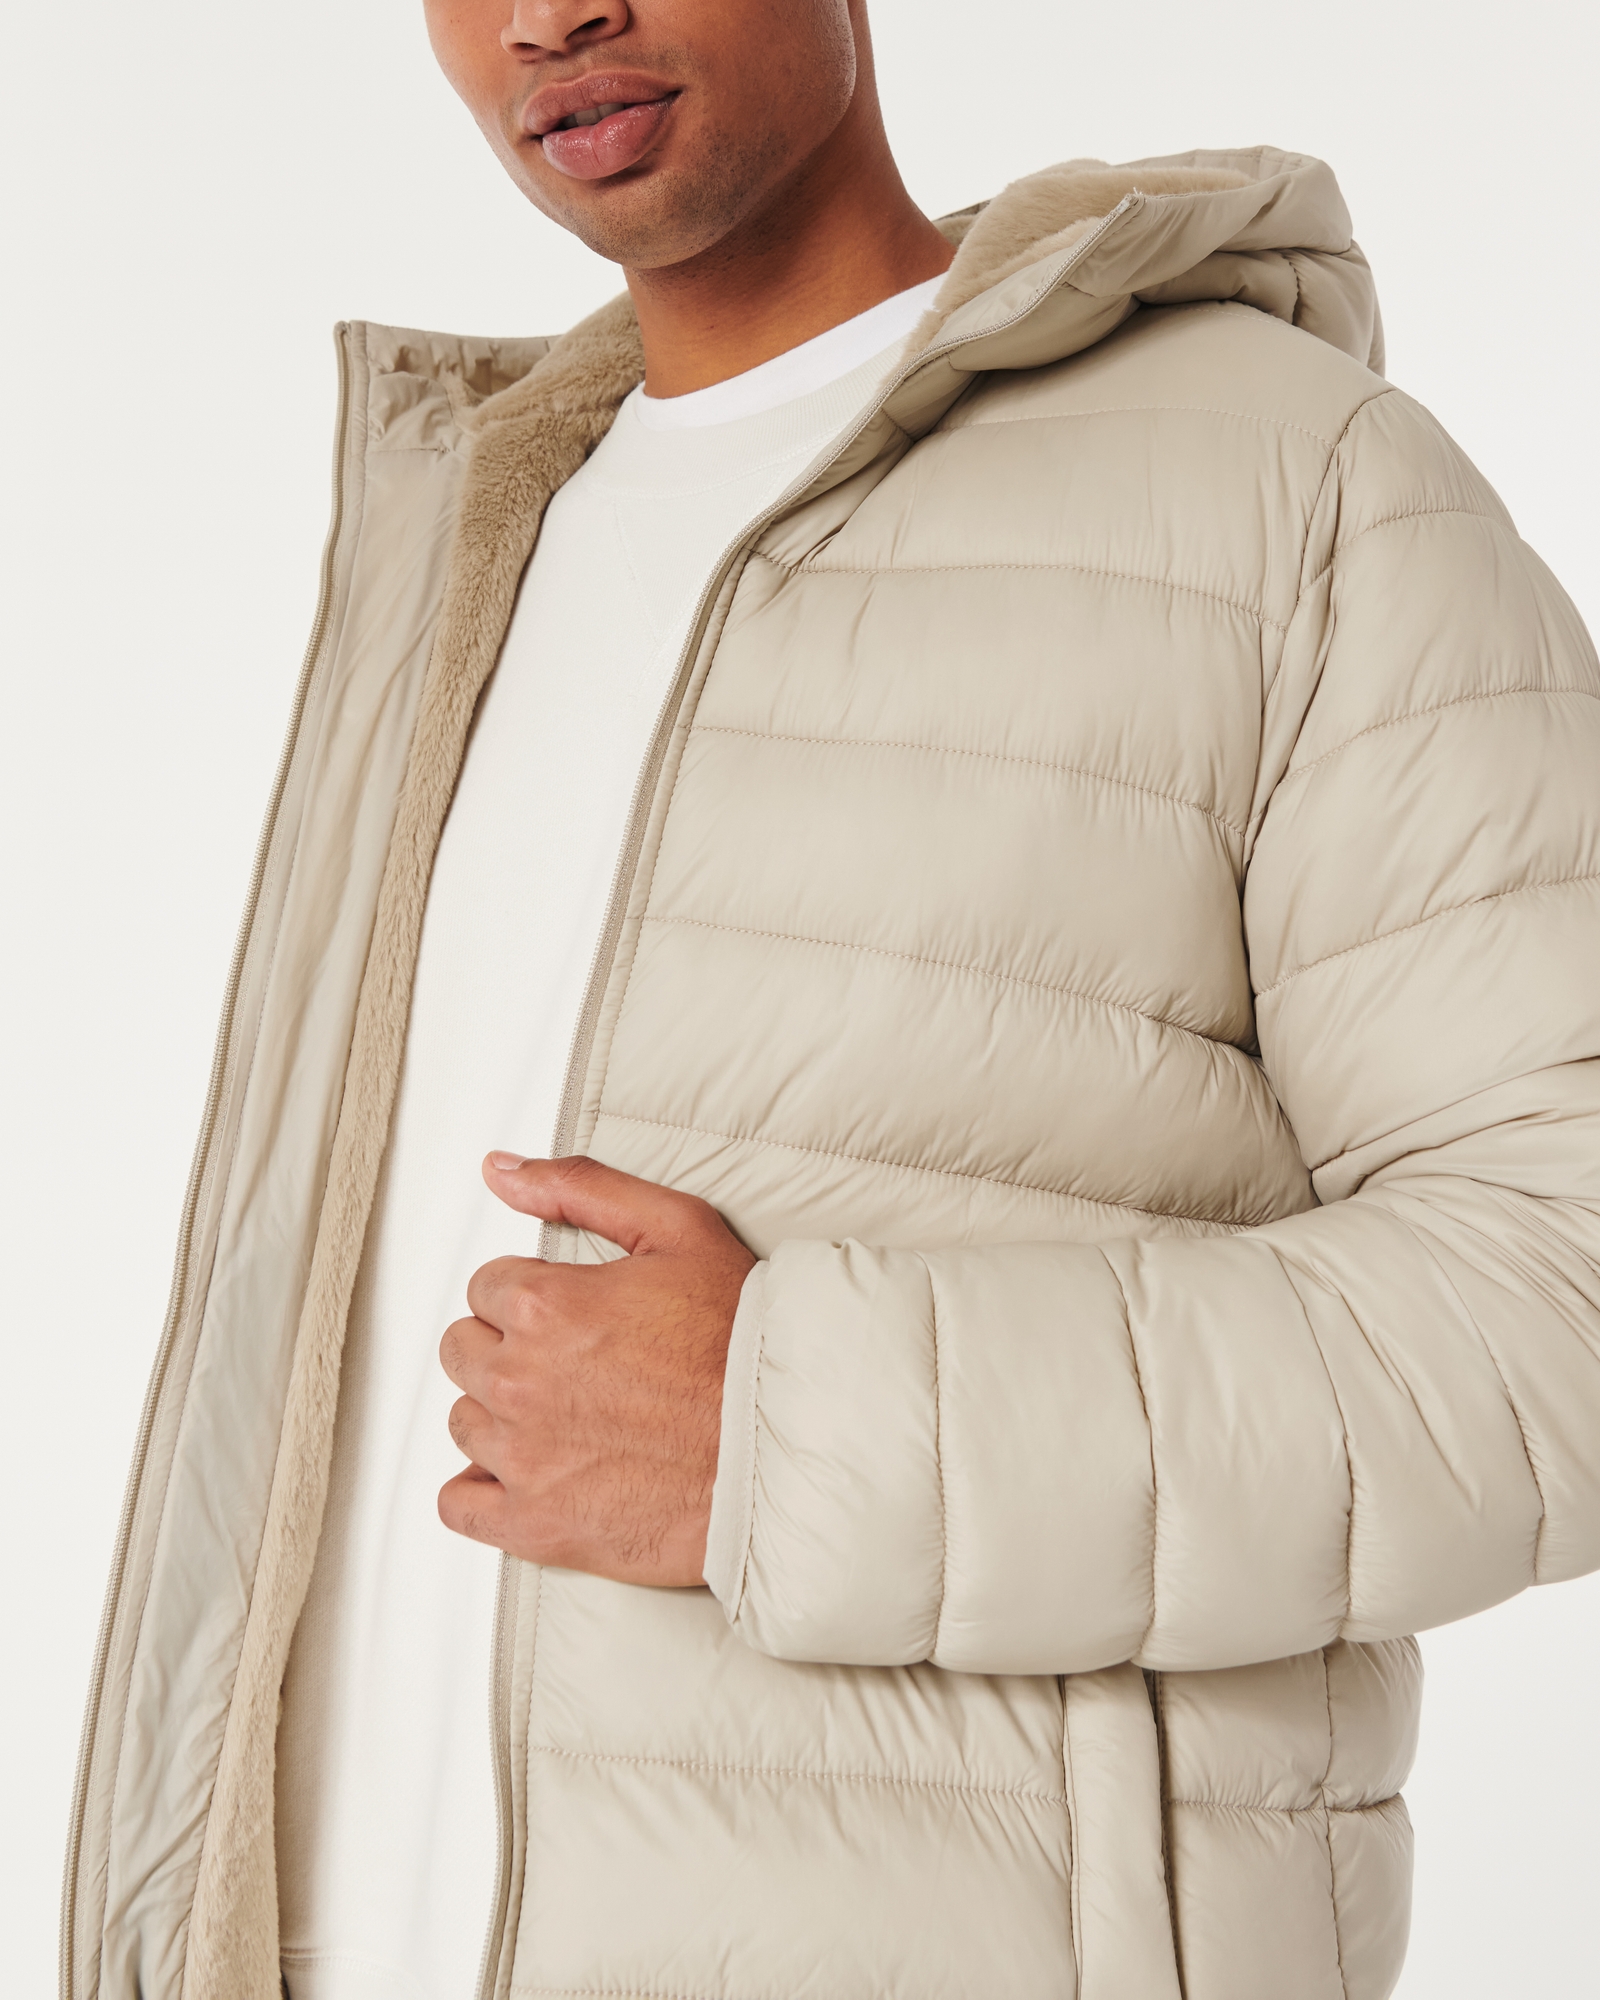 Hollister Faux Fur Fleece lined Parka Jacket Winter Coat Mens